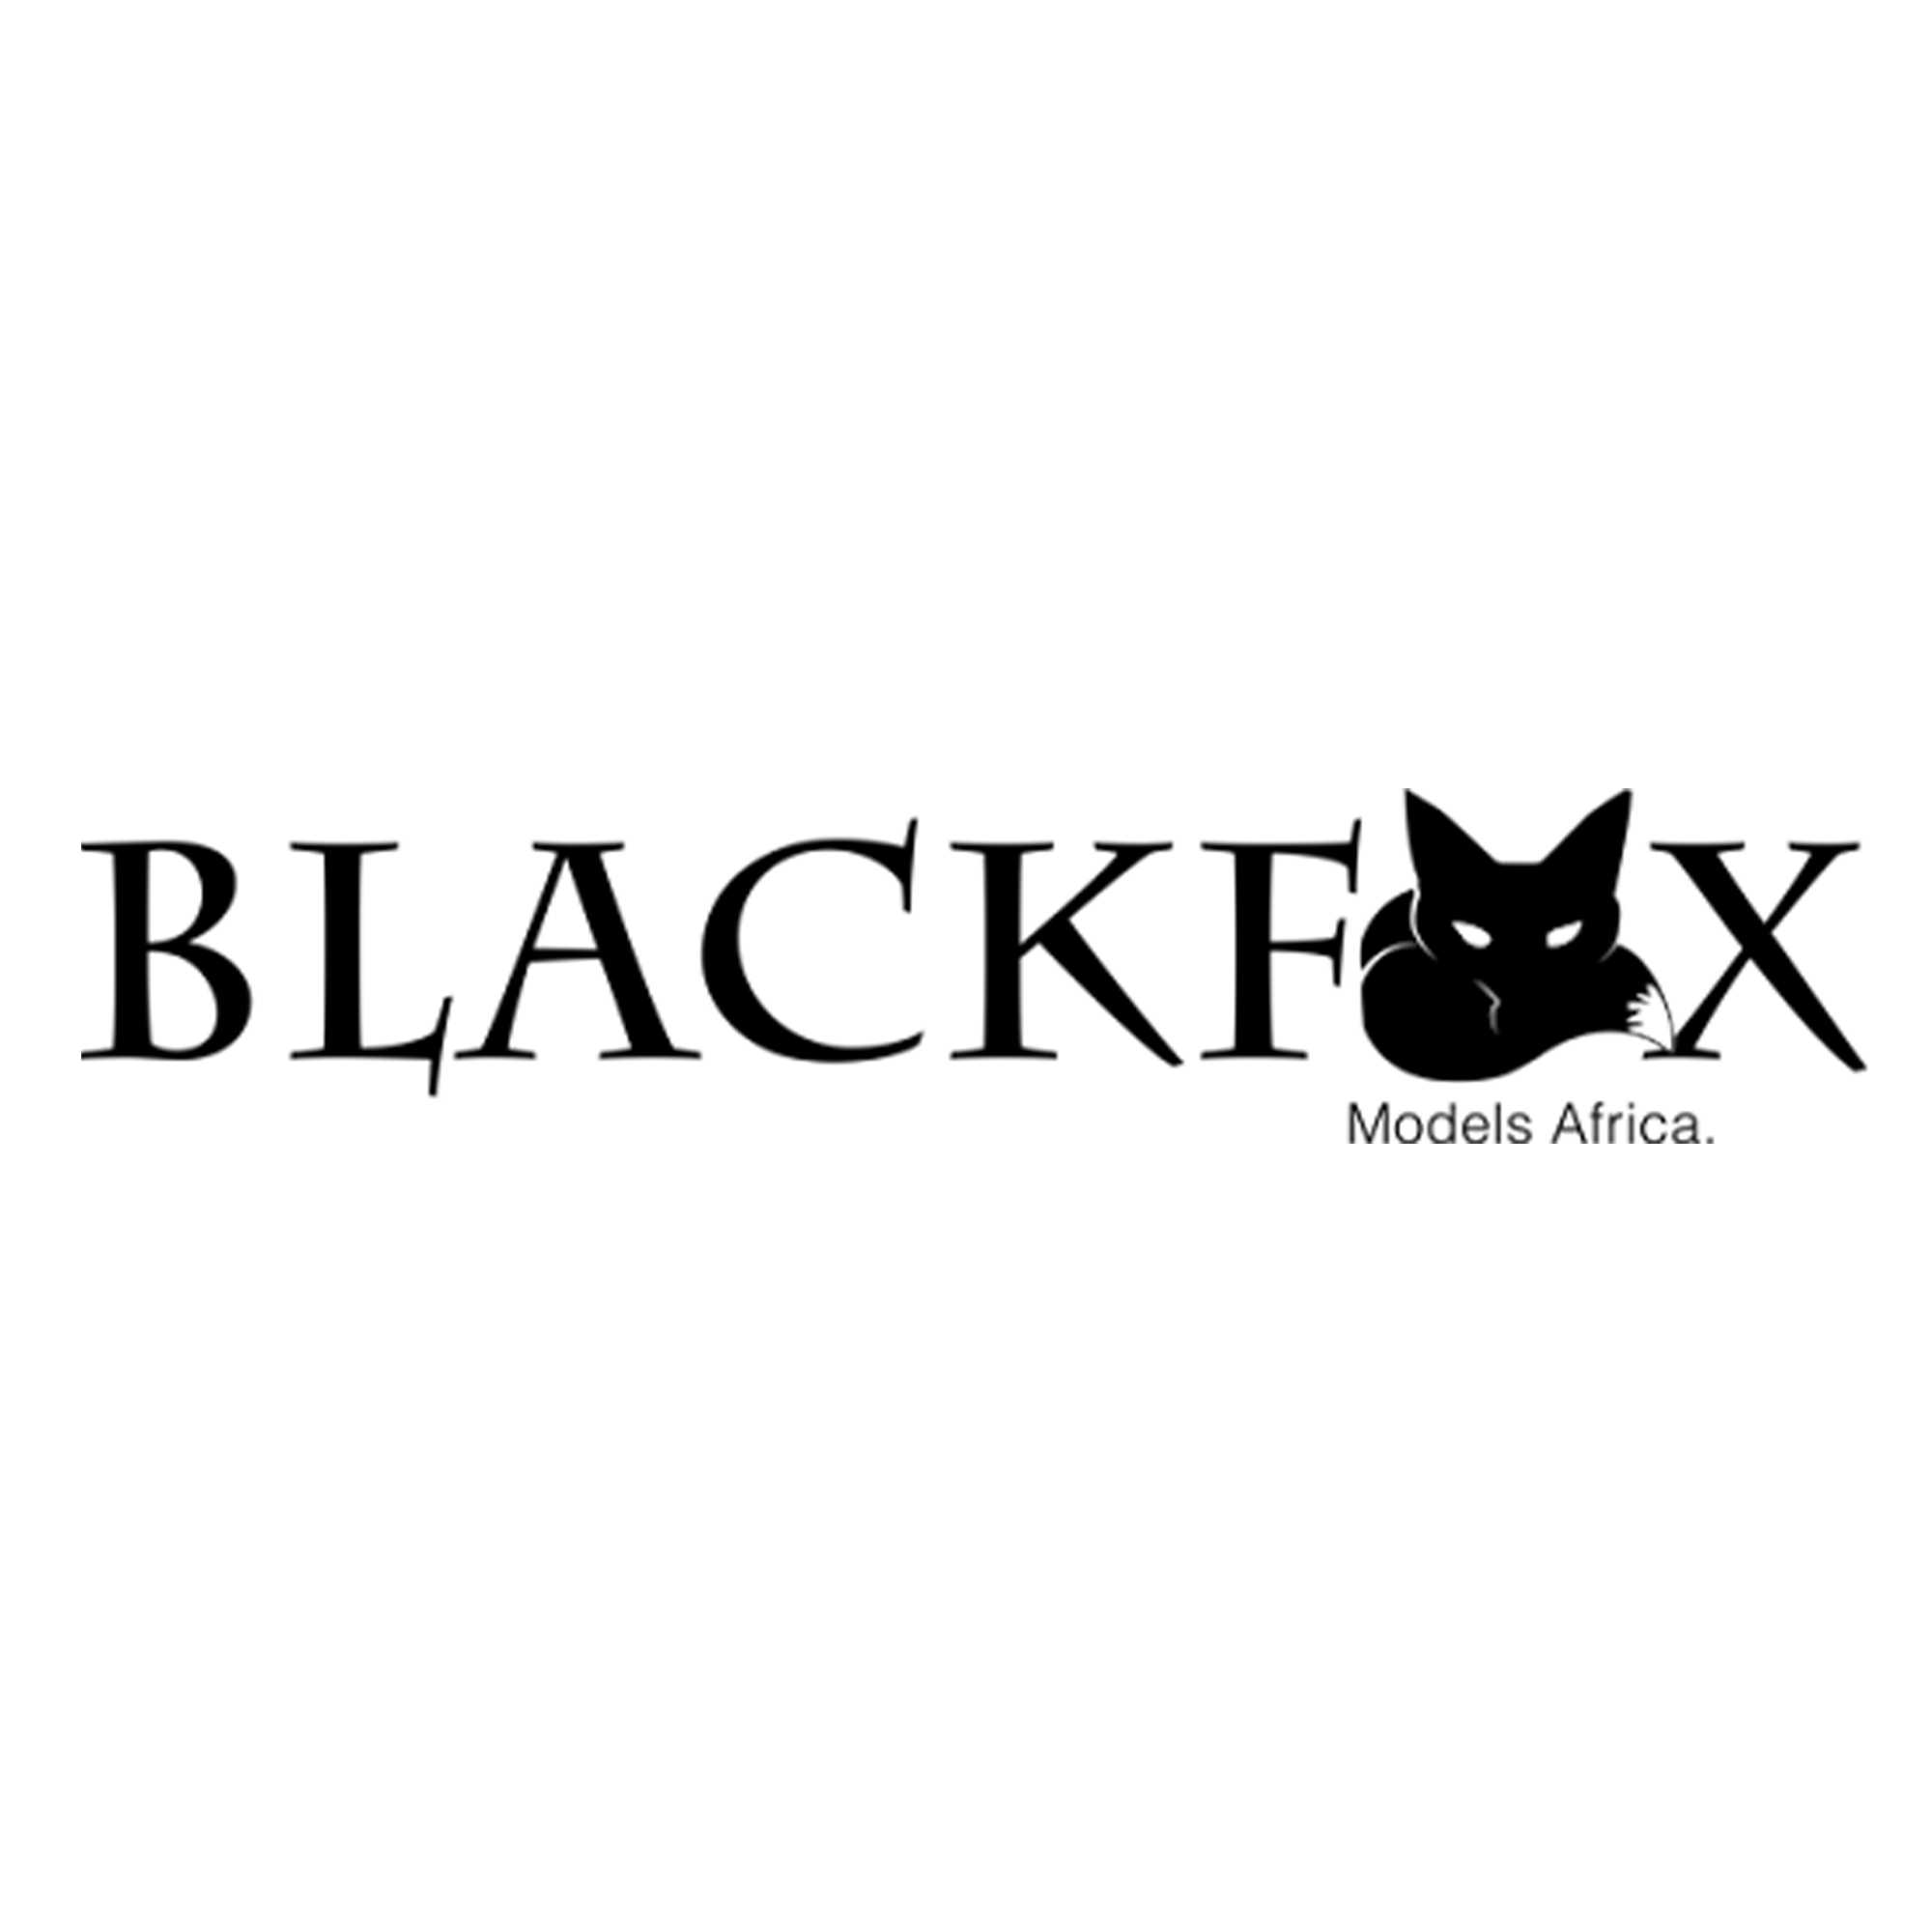 Blackfox Modelling Agency